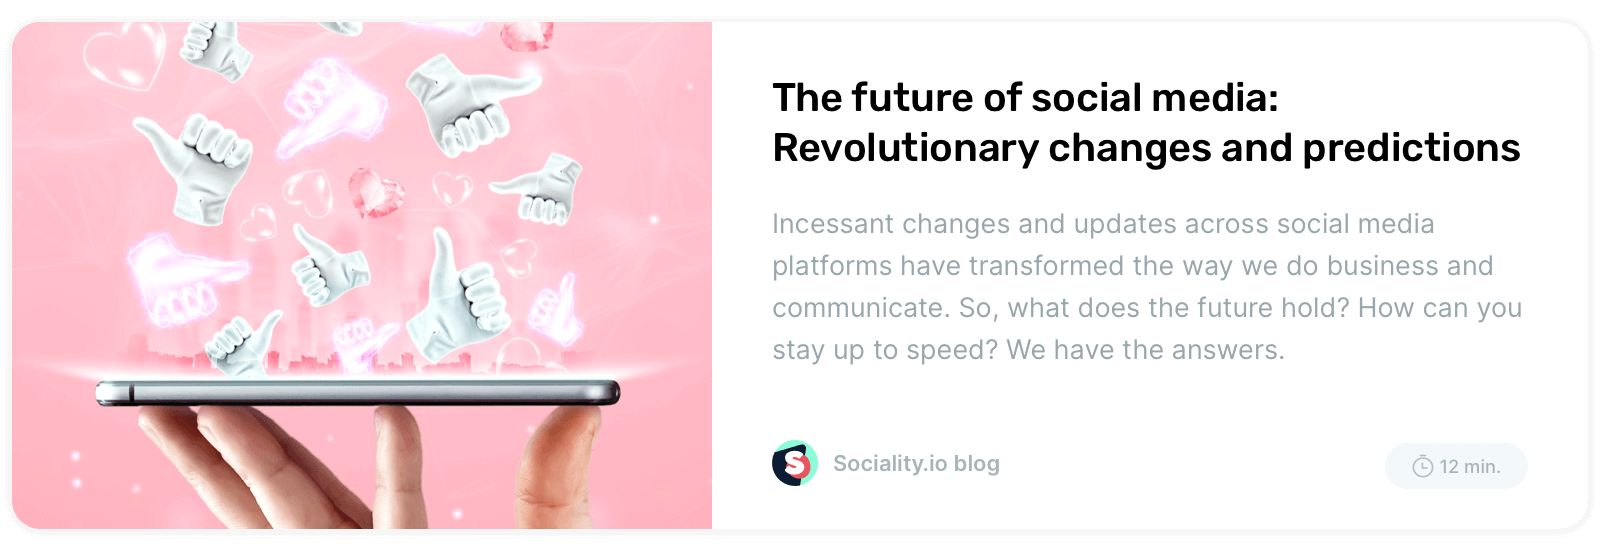 The future of social media